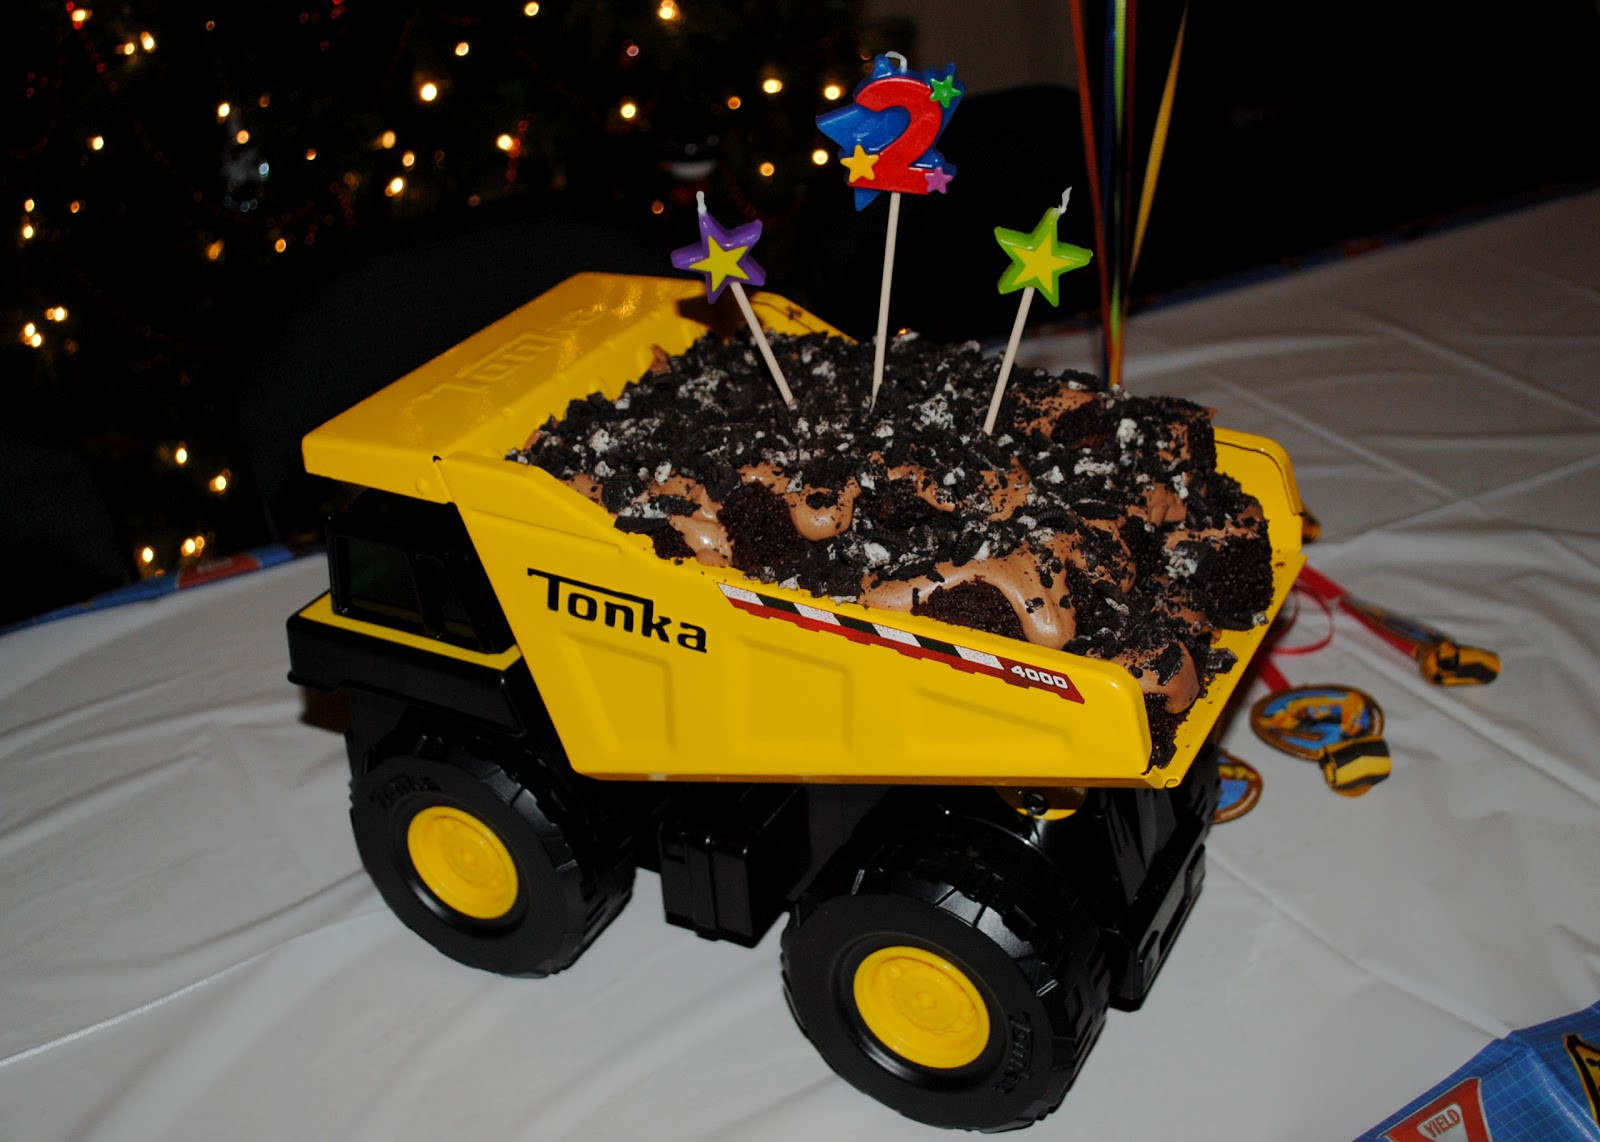 Dump Truck Birthday Cake
 Mud Trifle and a Dump Truck Birthday Cake